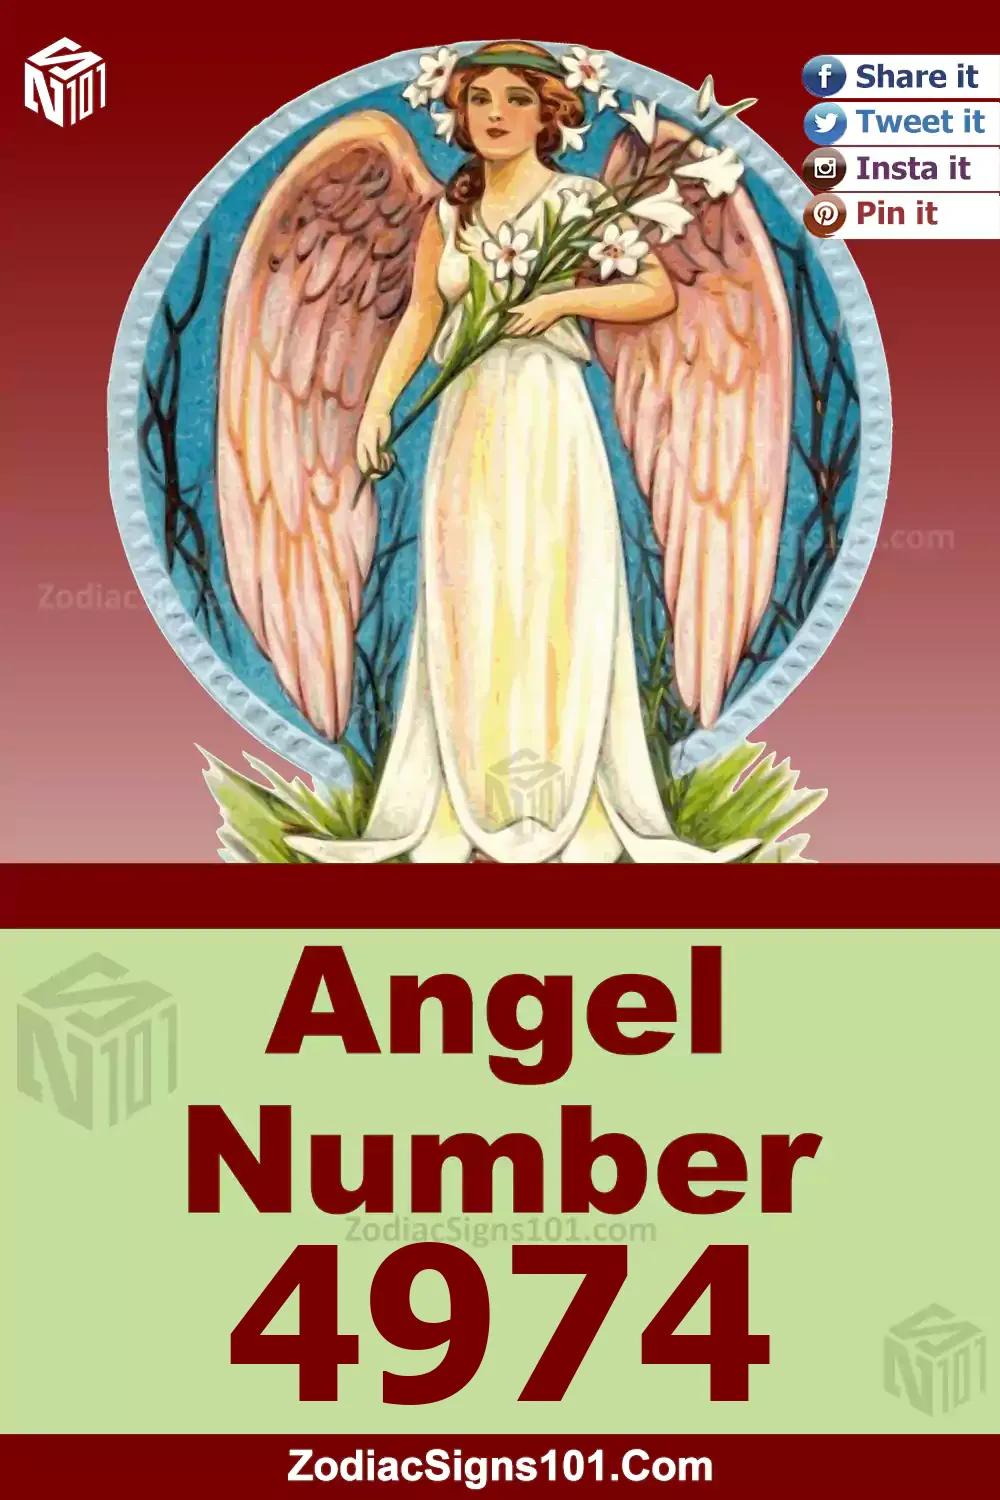 4974-Angel-Number-Meaning.jpg